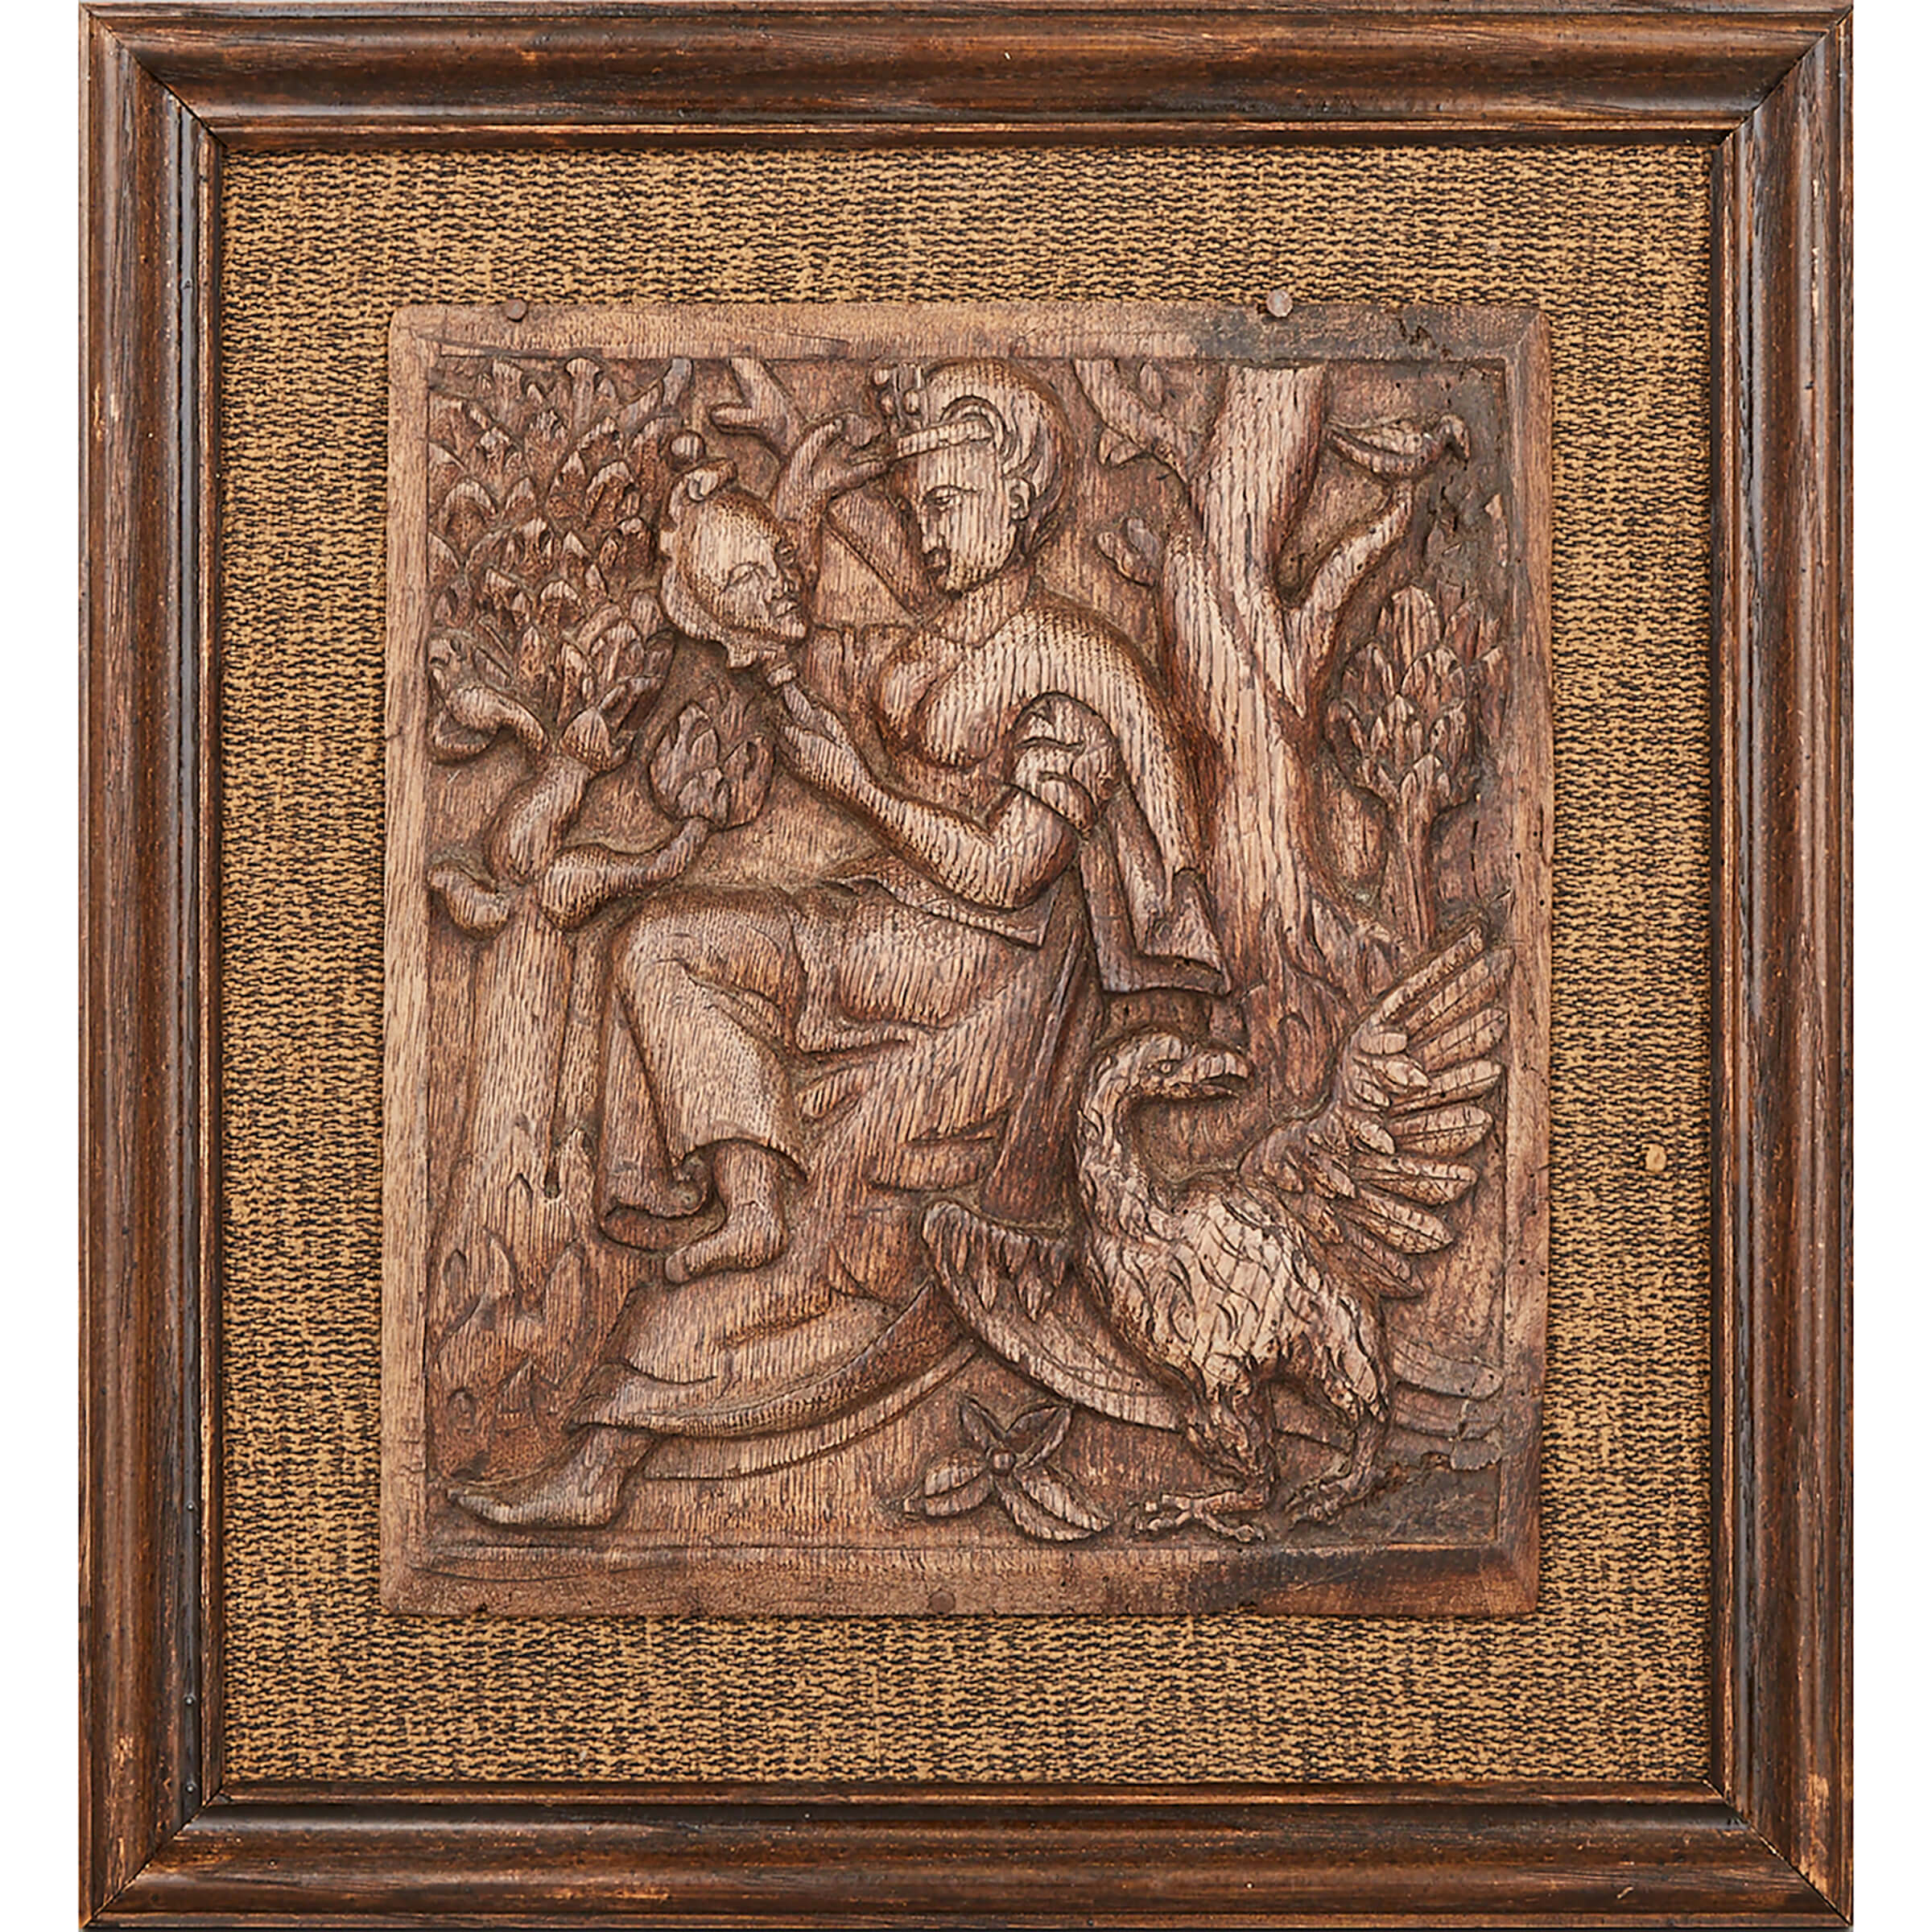 Flemish Allegorical Relief Carved Oak Figural Panel, 16th century